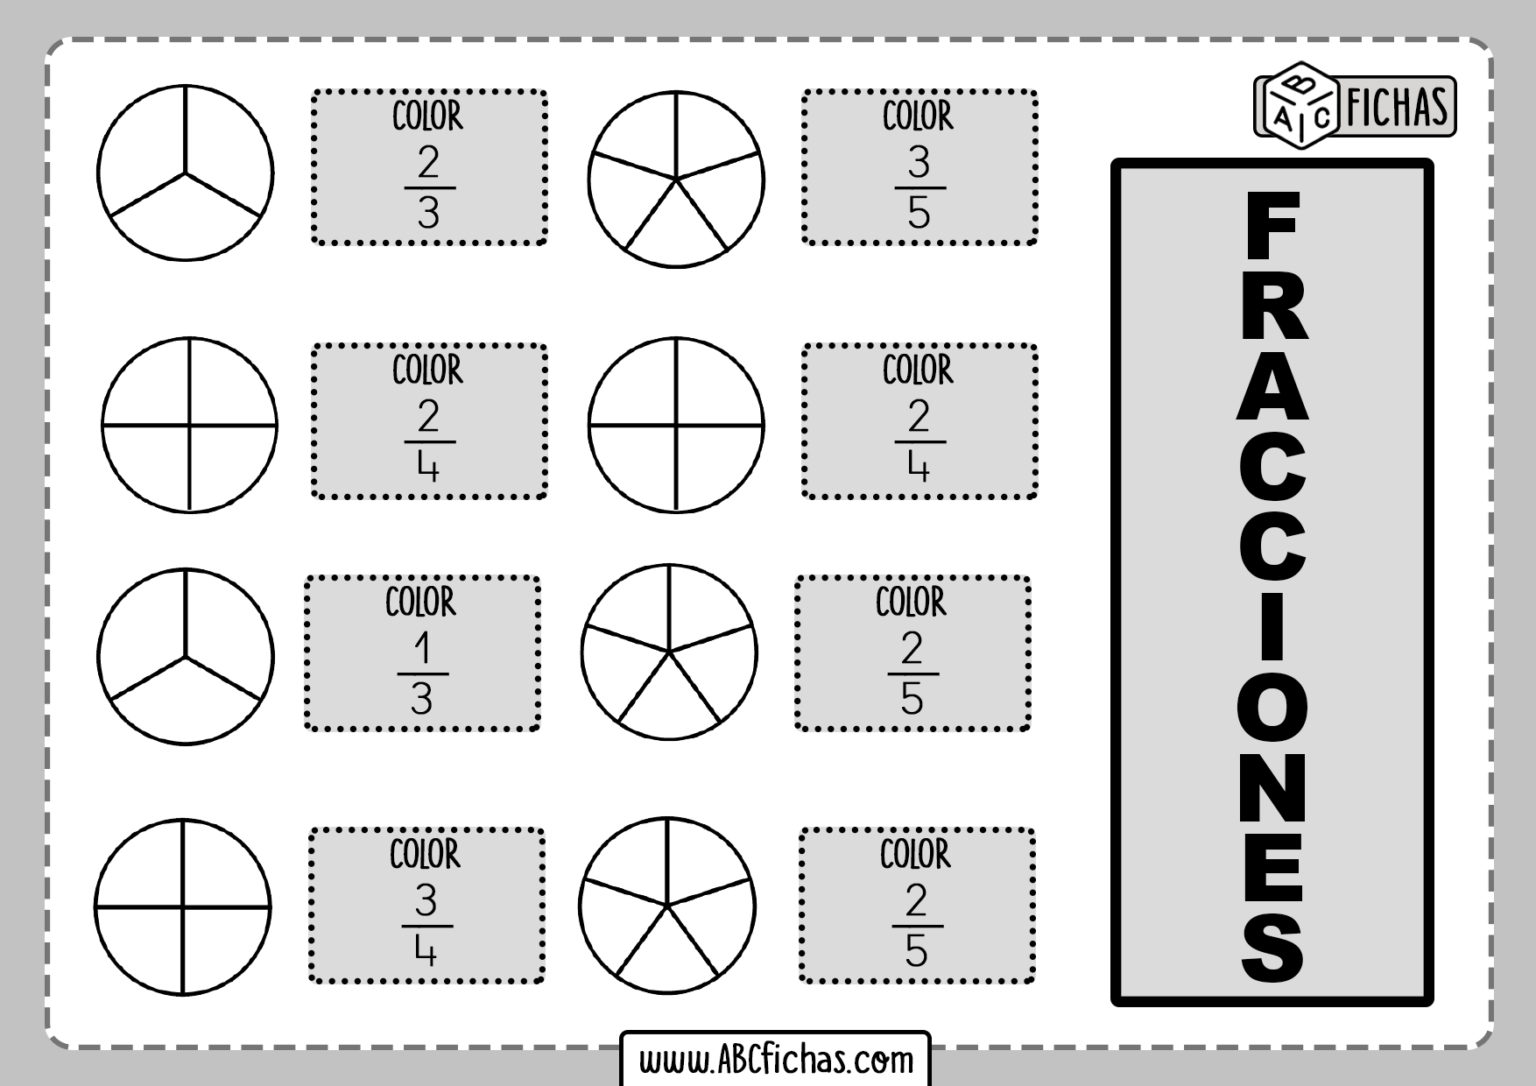 Fichas De Fracciones Matematicas Abc Fichas 6713